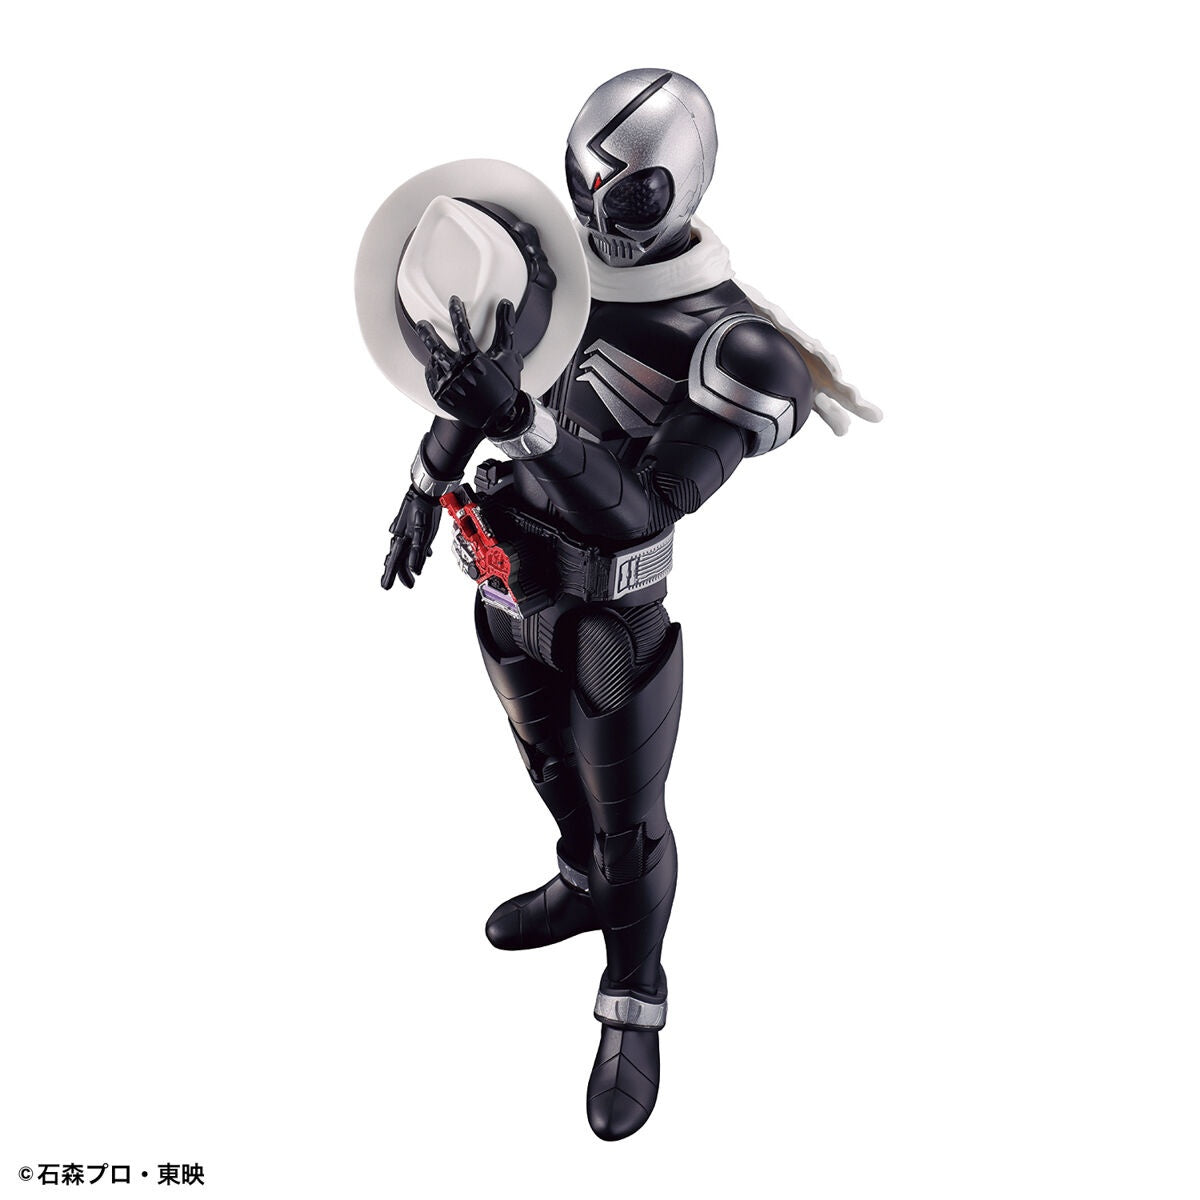 Bandai Figure-rise Standard Kamen Rider Skull Model Kit